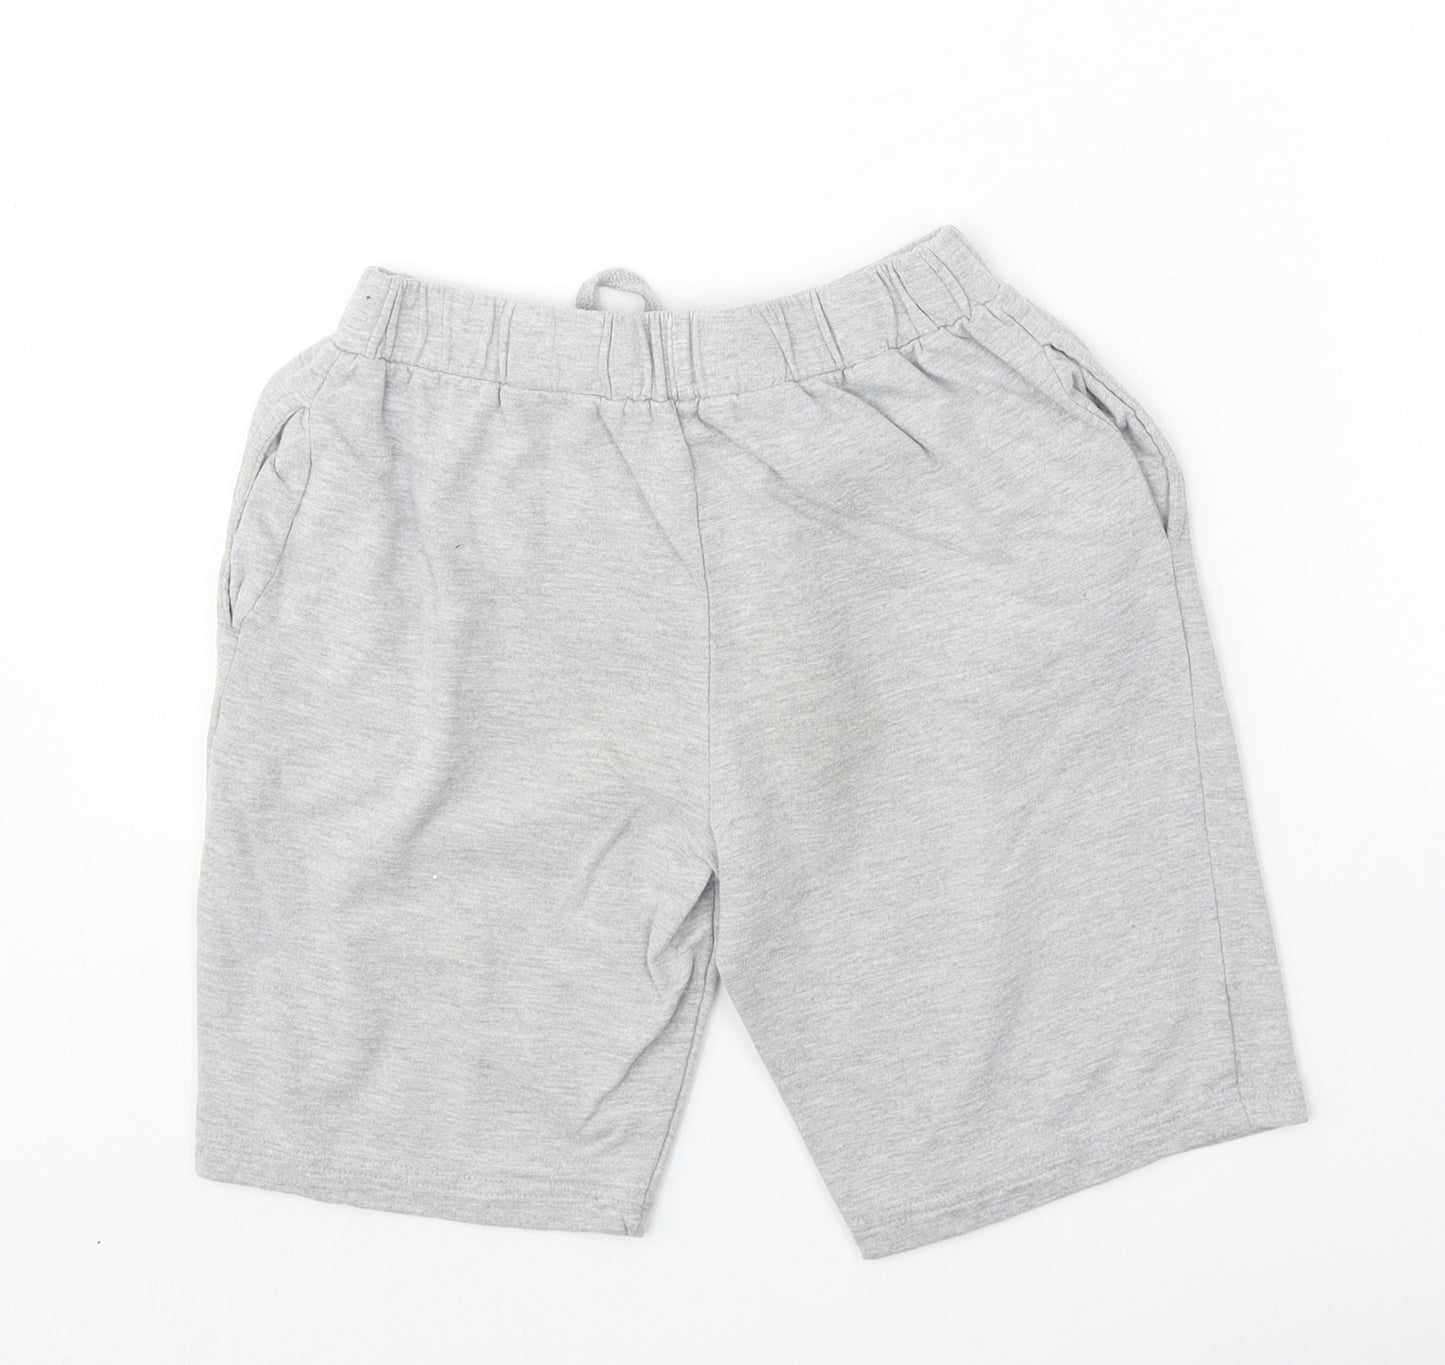 Preworn Boys Grey Cotton Sweat Shorts Size 8-9 Years Regular Tie